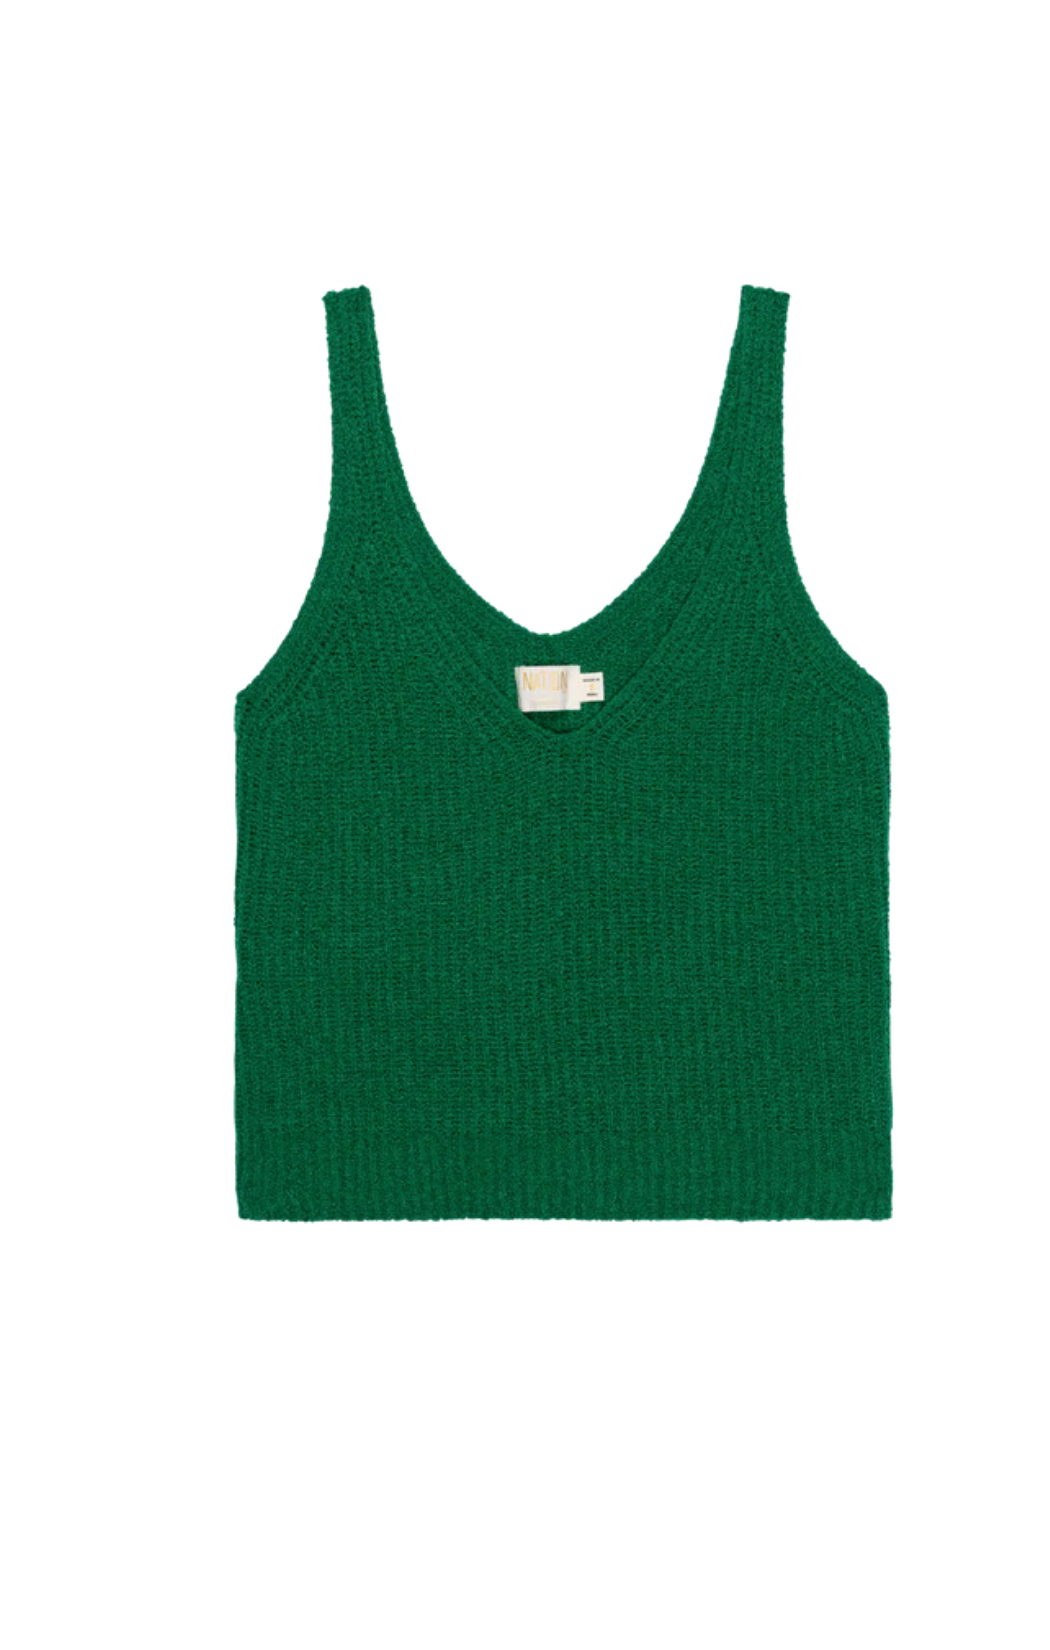 Cece Sweater by Nation LTD Green